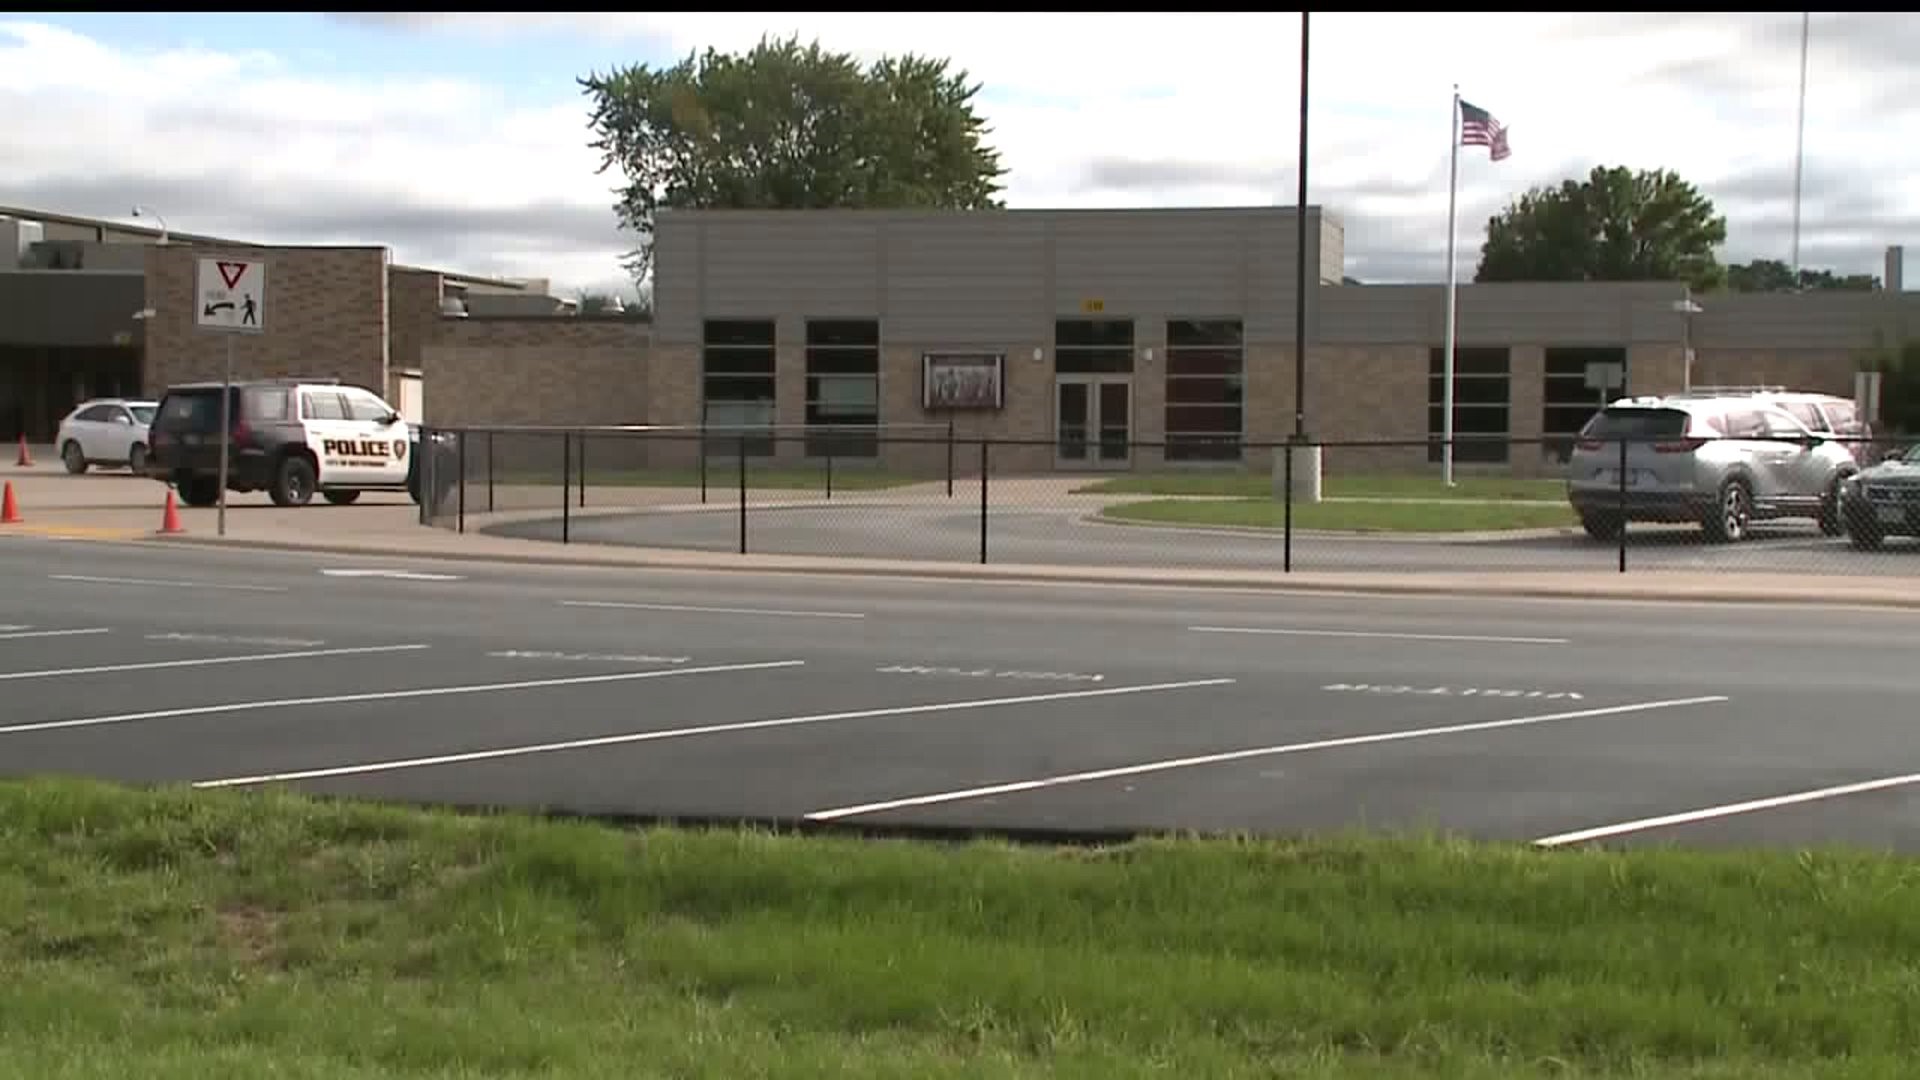 Disturbance Causes Temporary Lockdown at Bettendorf Middle School